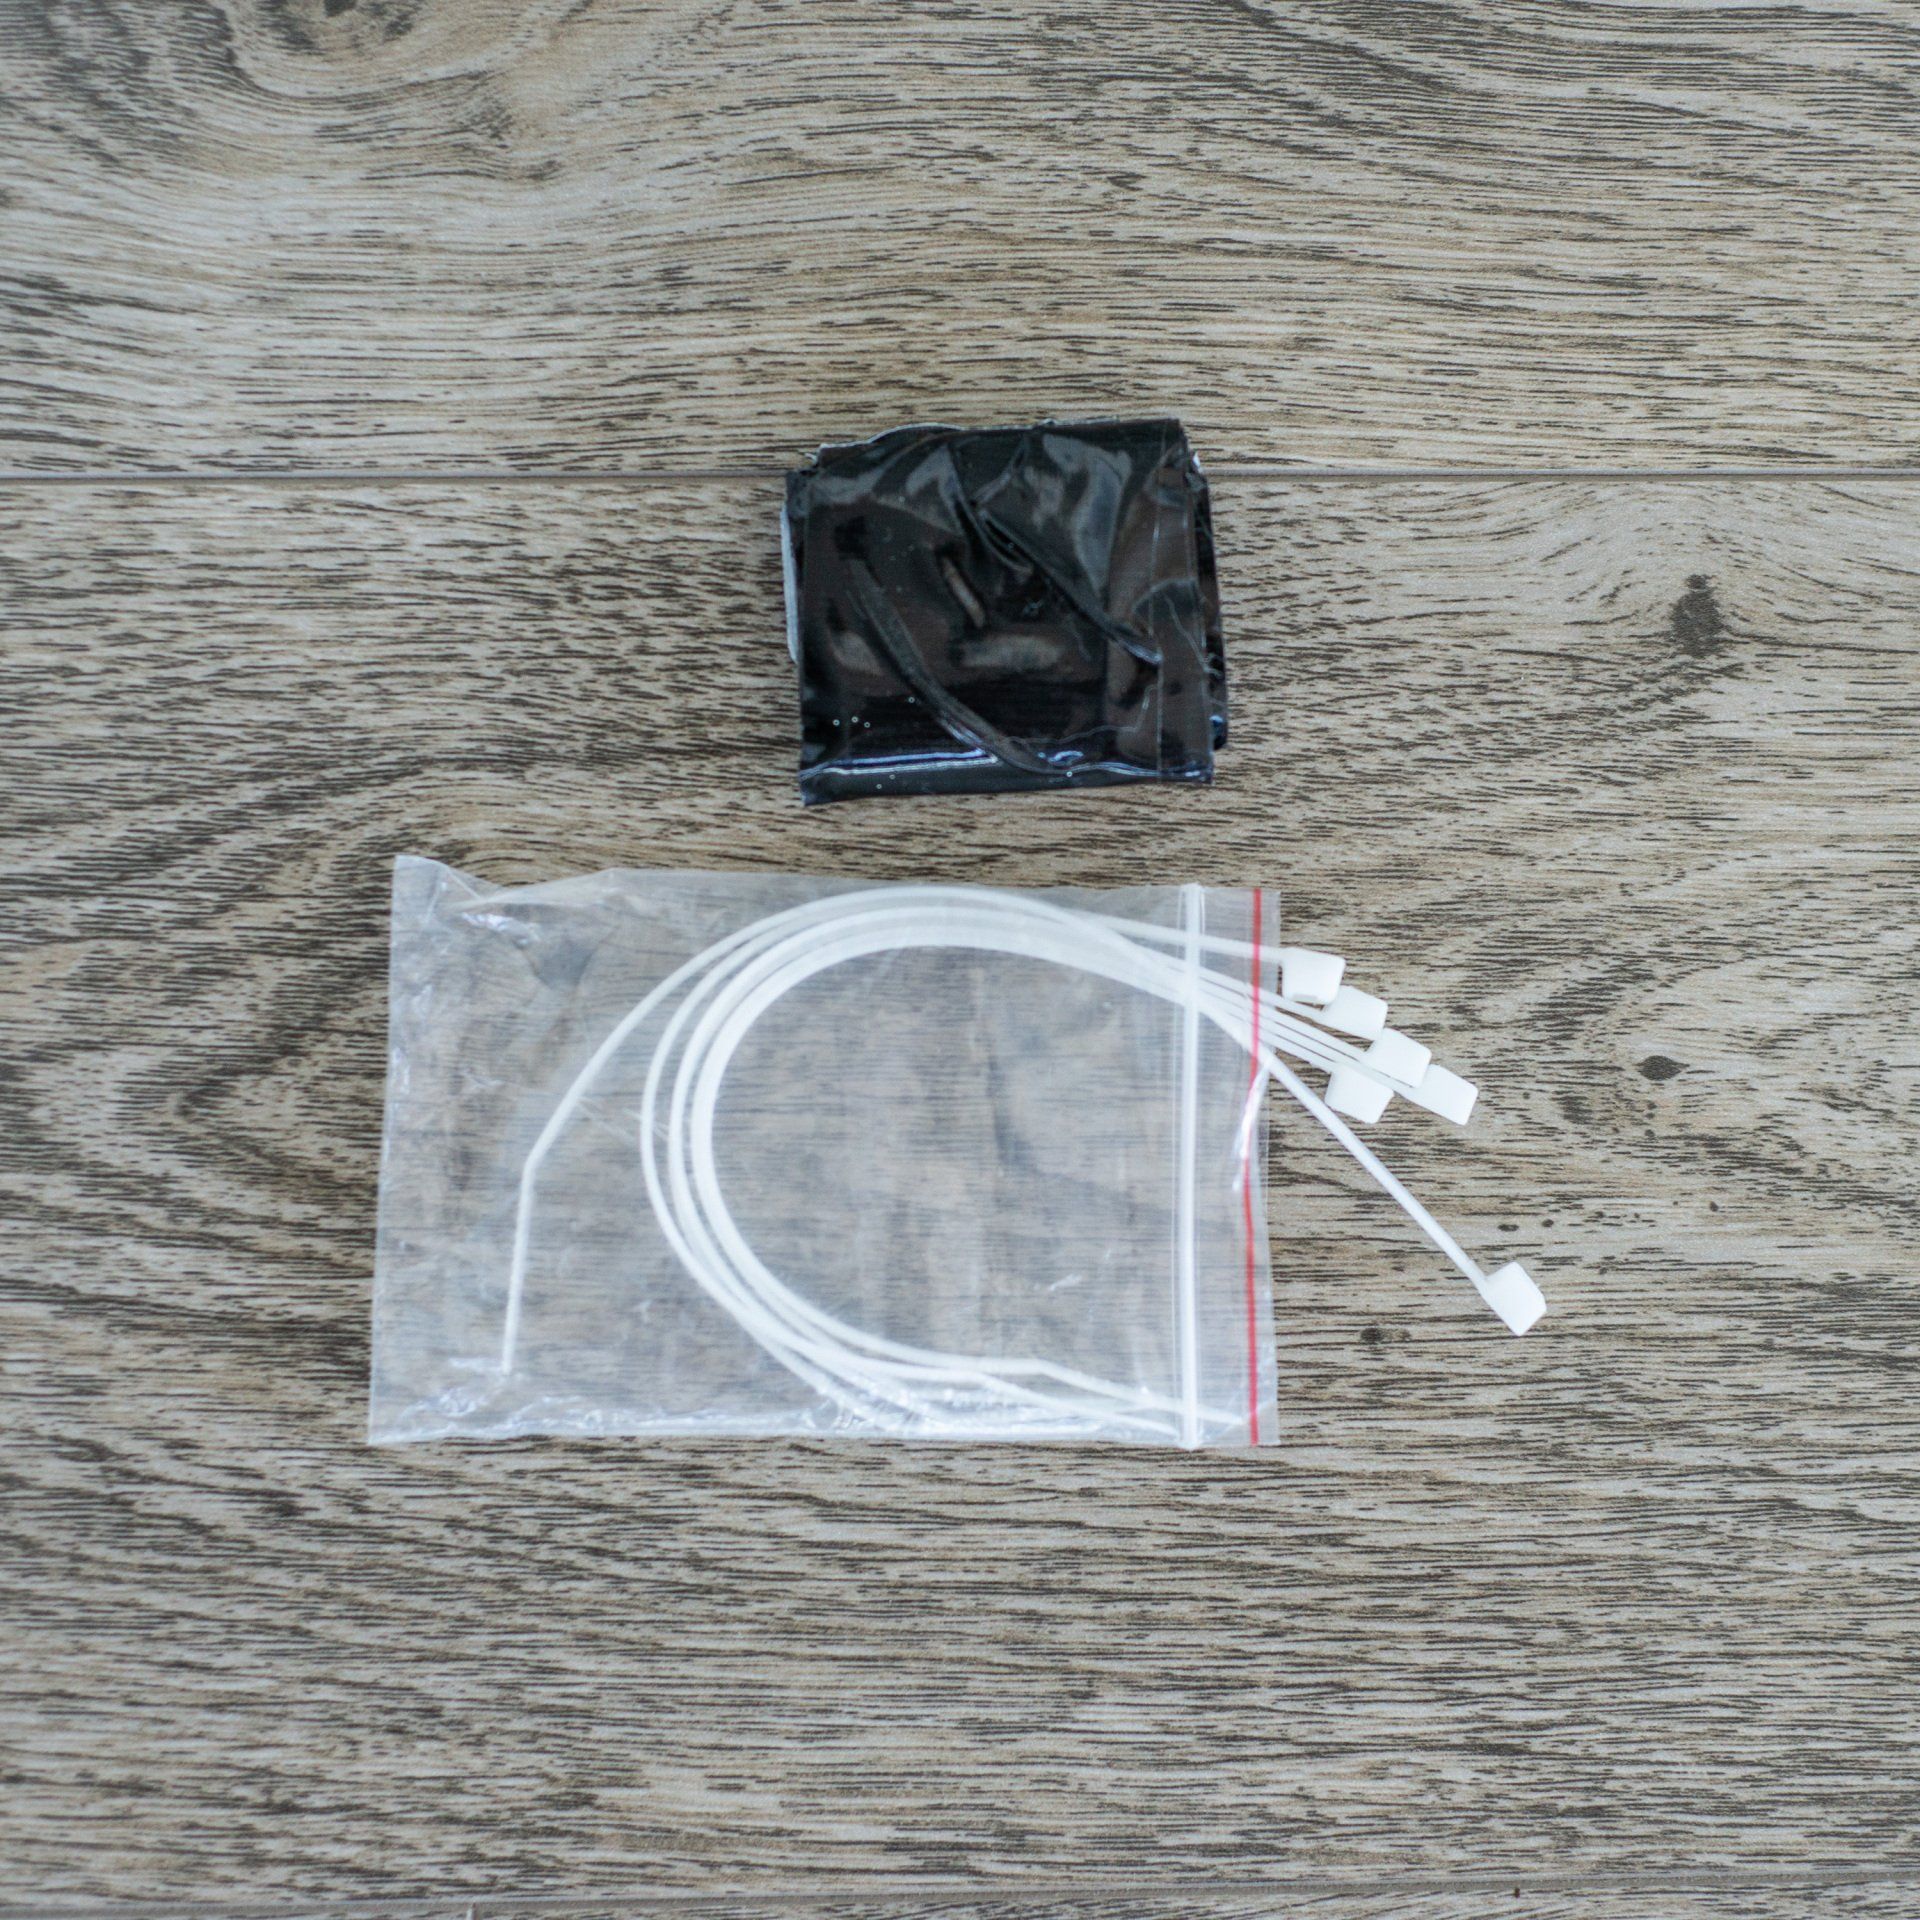 Backpacking repair kit - plastic ties and duct tape